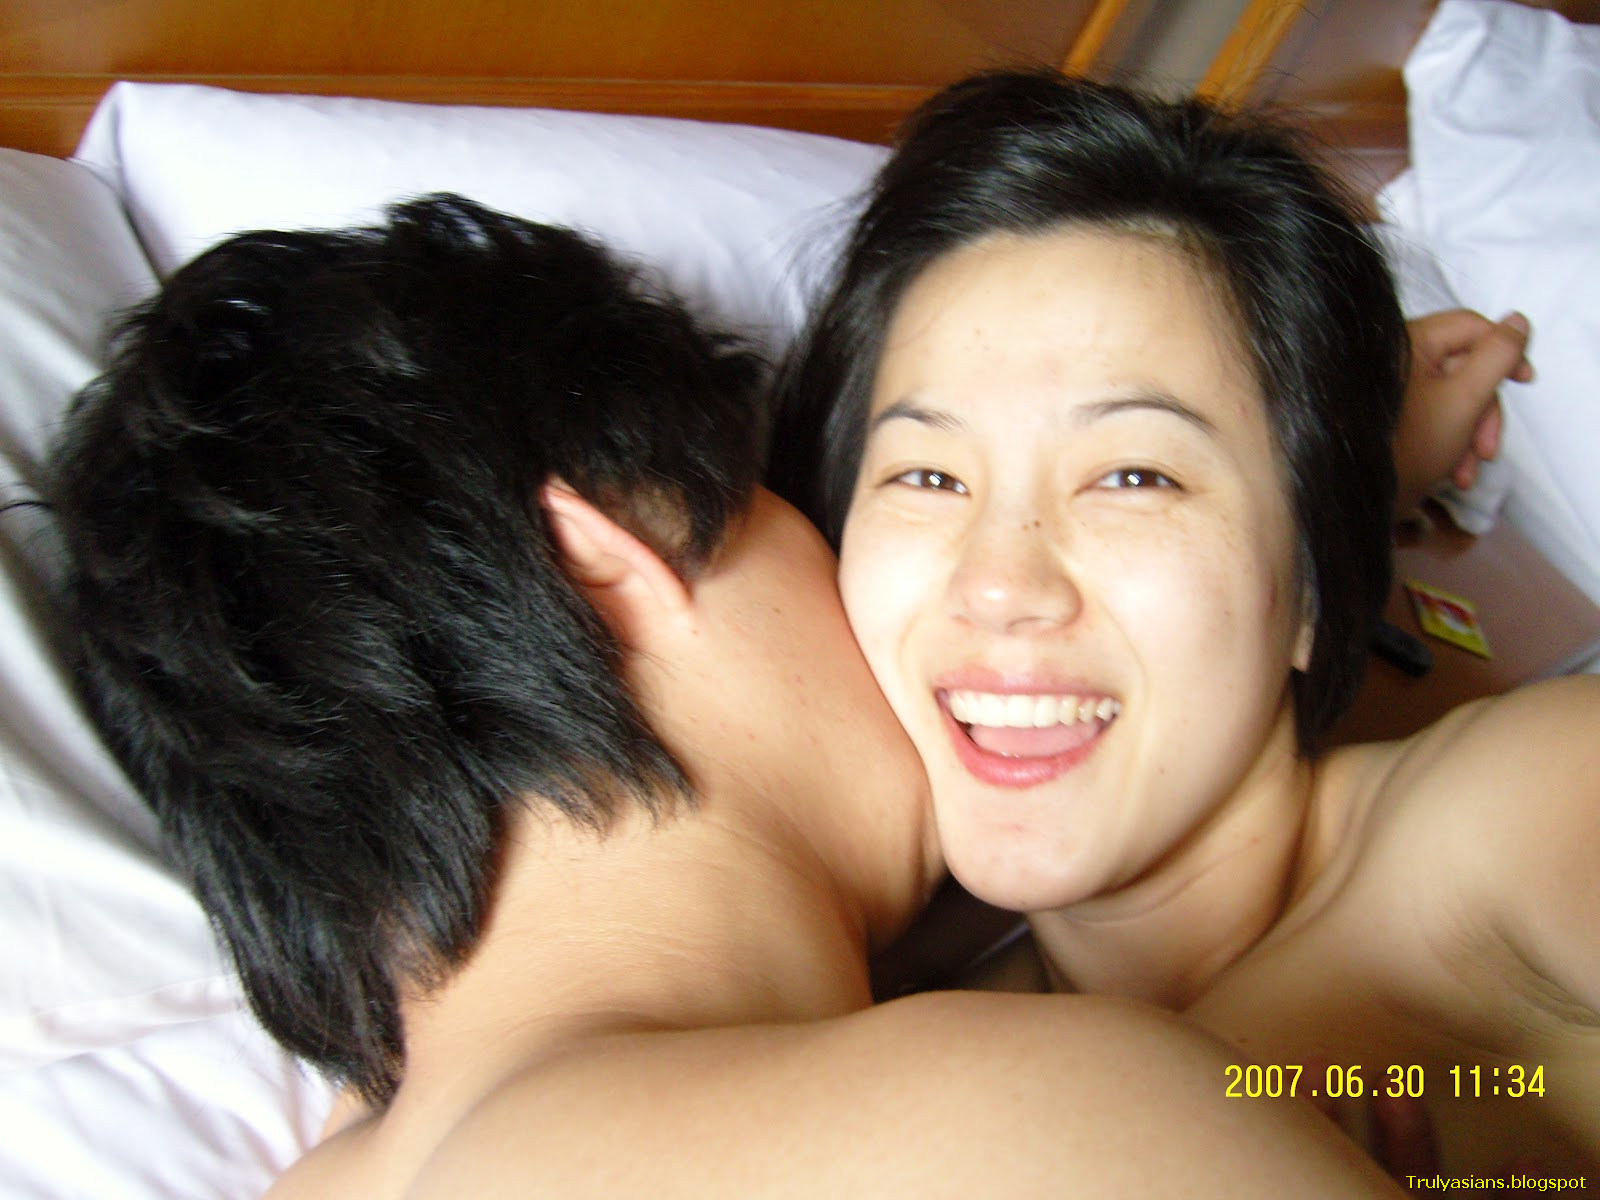 Korean amateur couple ❤️ Best adult photos at onlynaked.pics